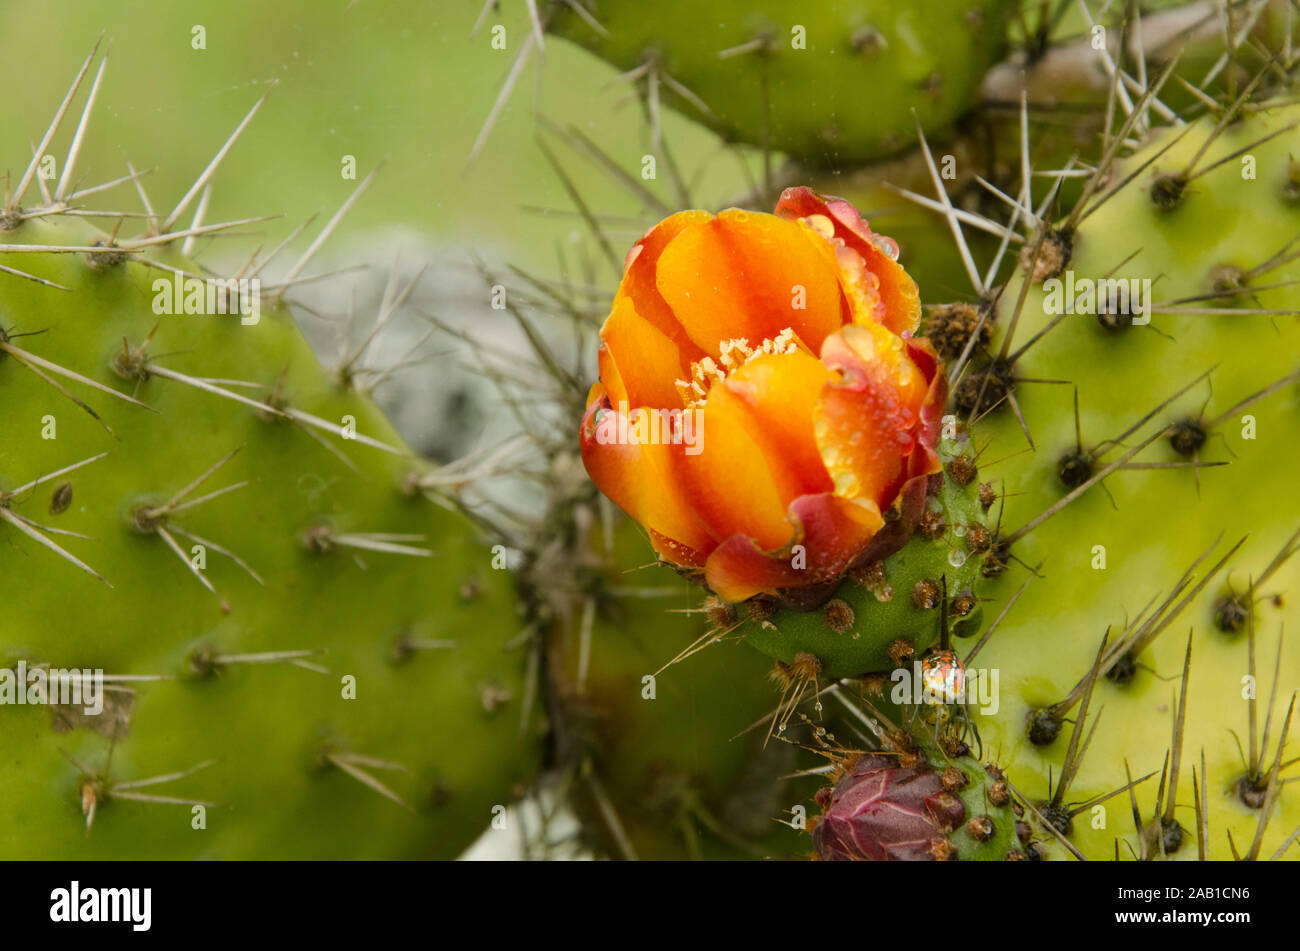 Arid climate vegetation: nopal, prickly pear cactus orange and yellow flower Stock Photo